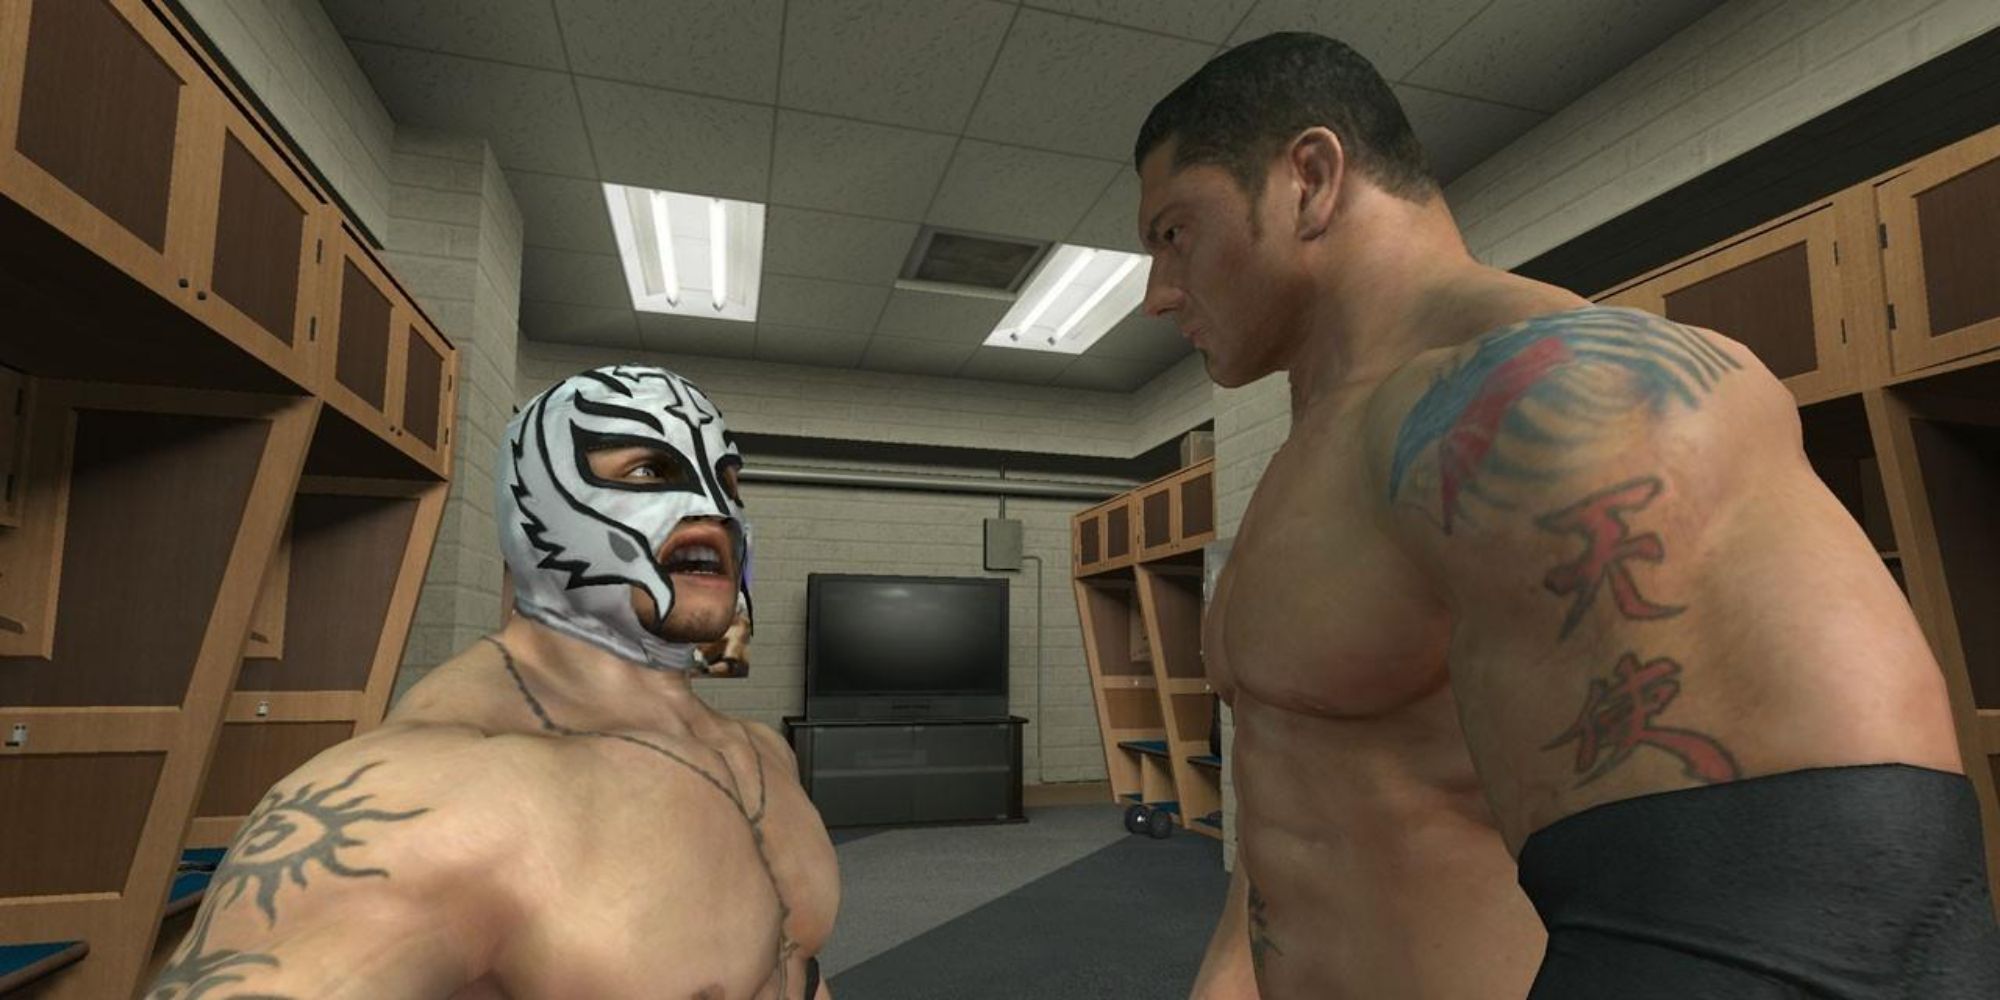 Smackdown vs Raw 2009 Screenshot Of Rey Mysterio and Batista Road To Wrestlemania Cutscene